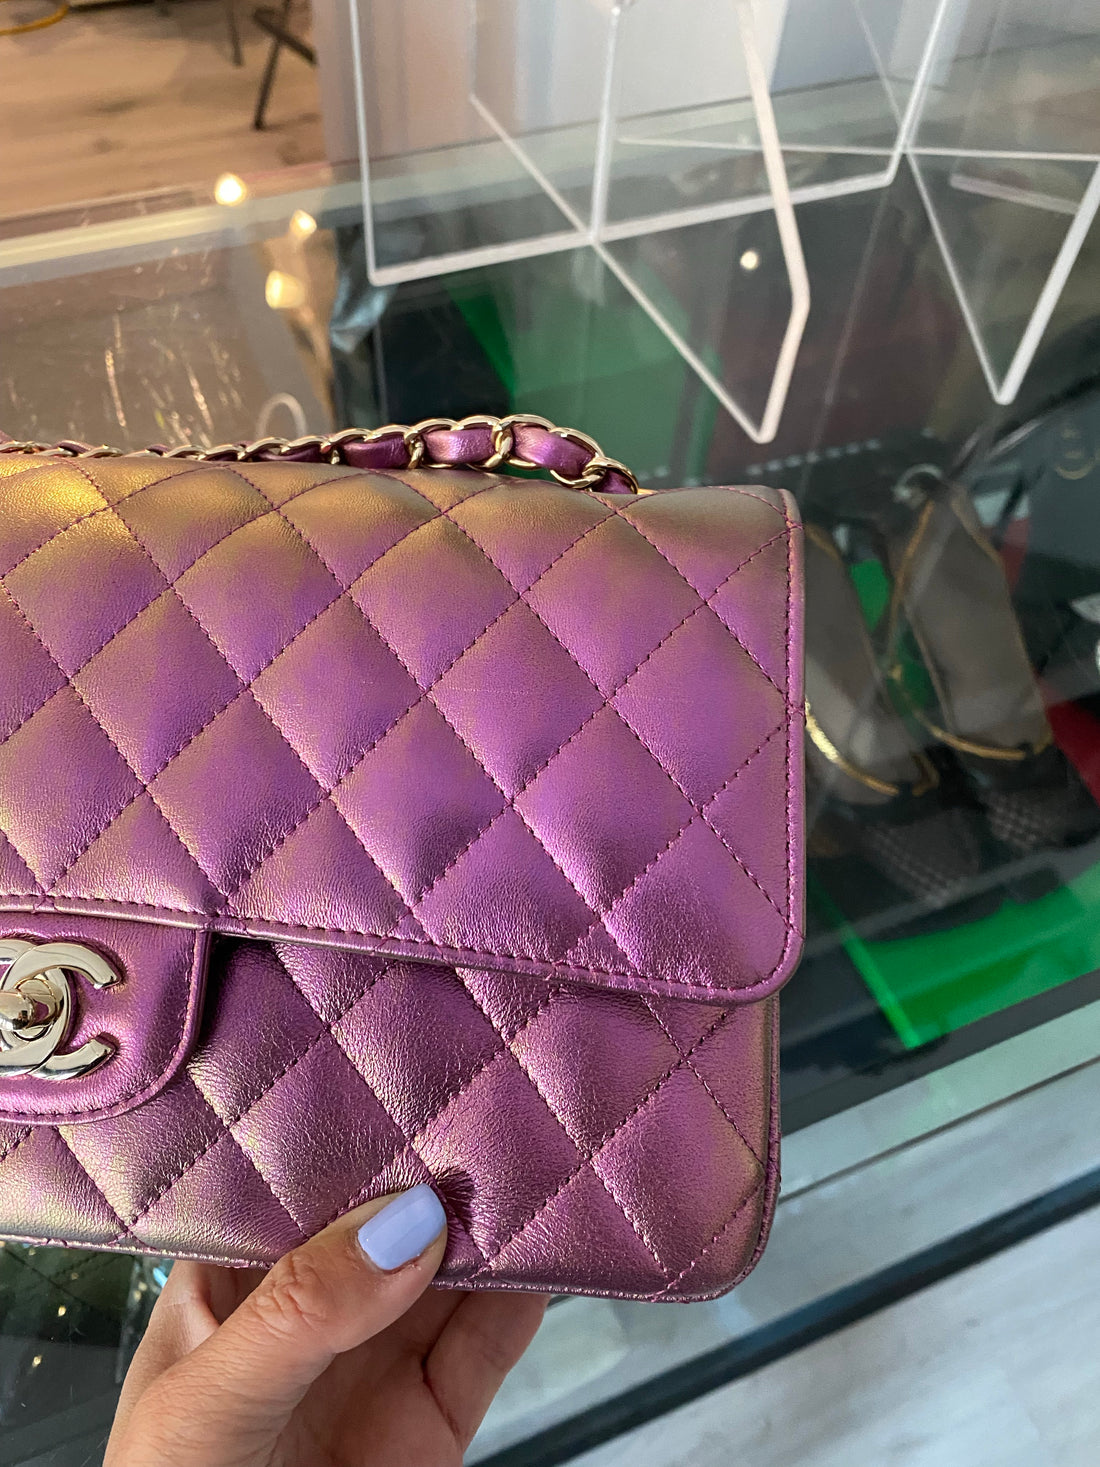 Chanel 20B Purple Iridescent Rainbow Medium Classic Flap Bag – I